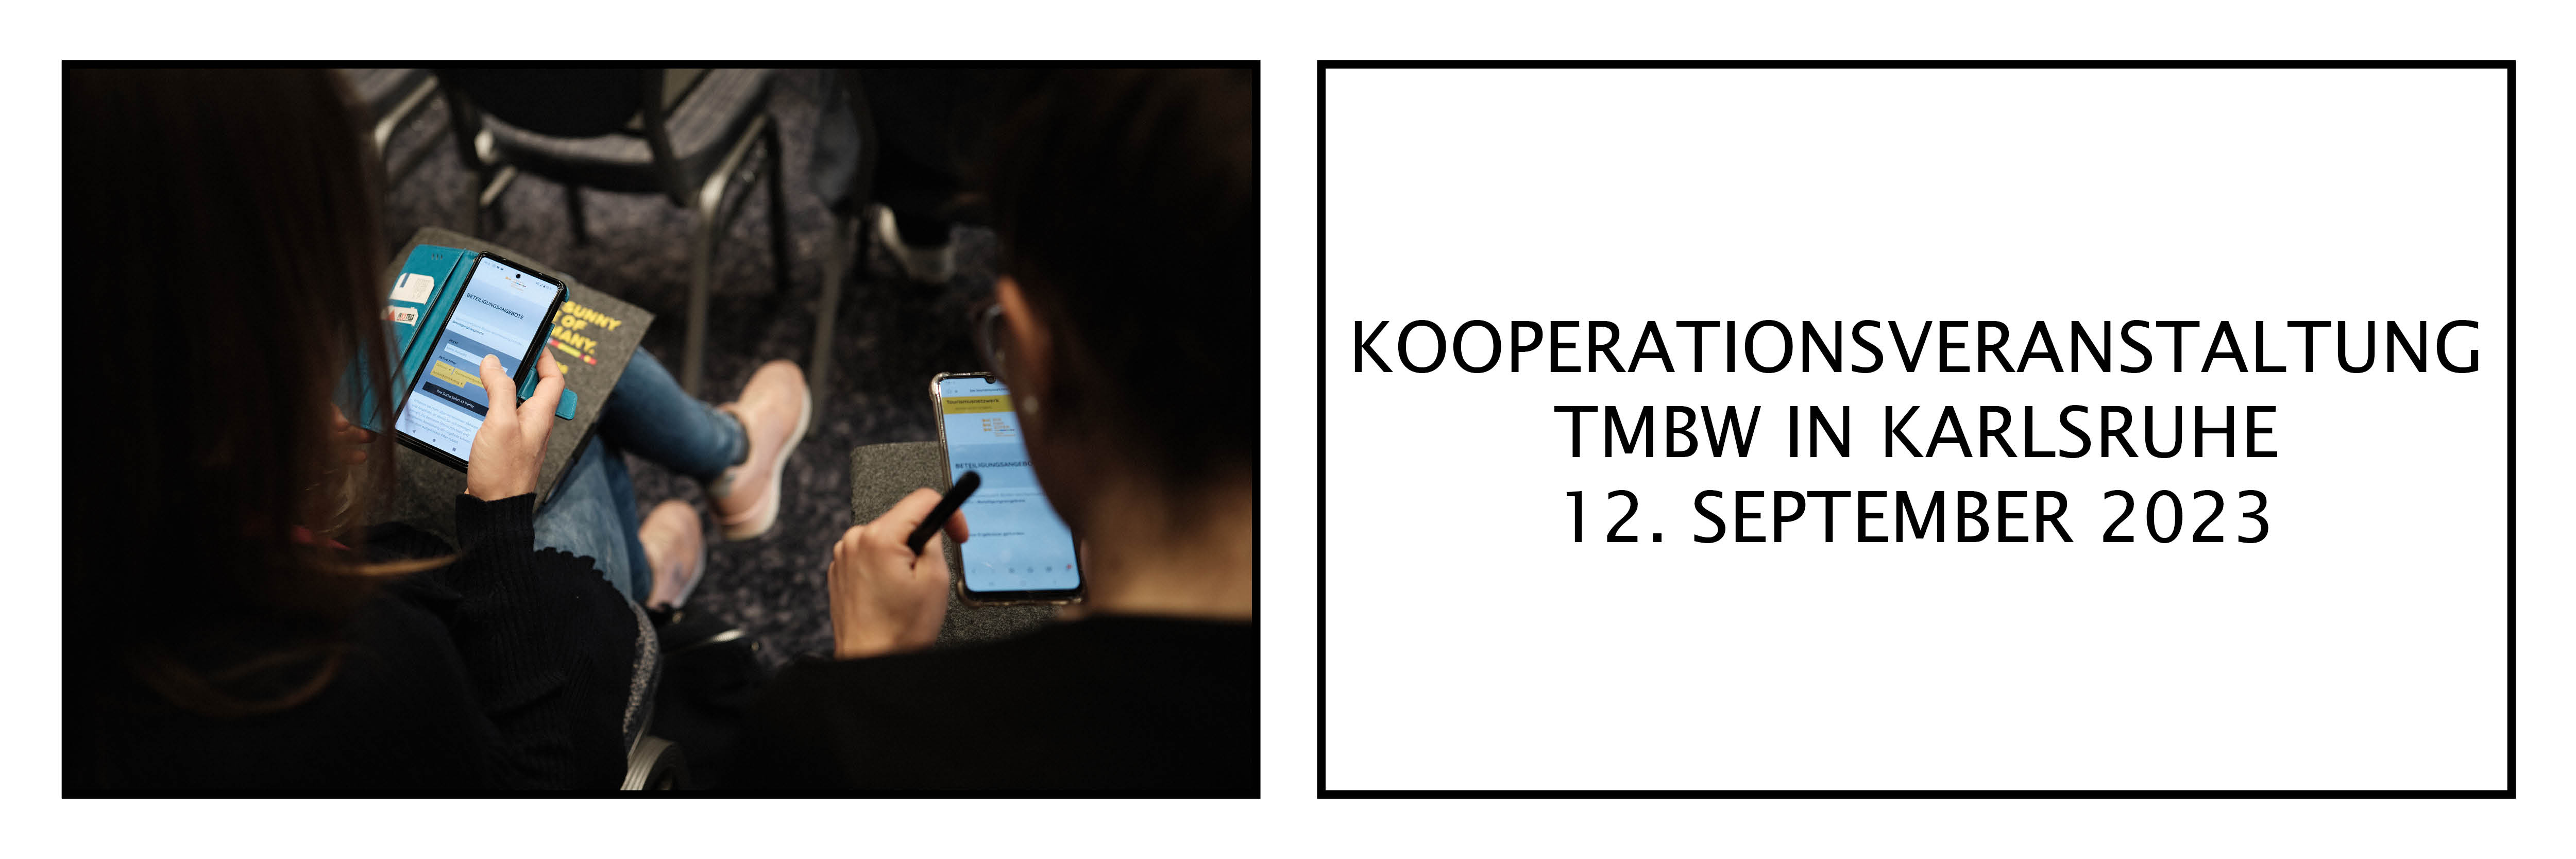 Kooperationsveranstaltung TMBW in Karlsruhe